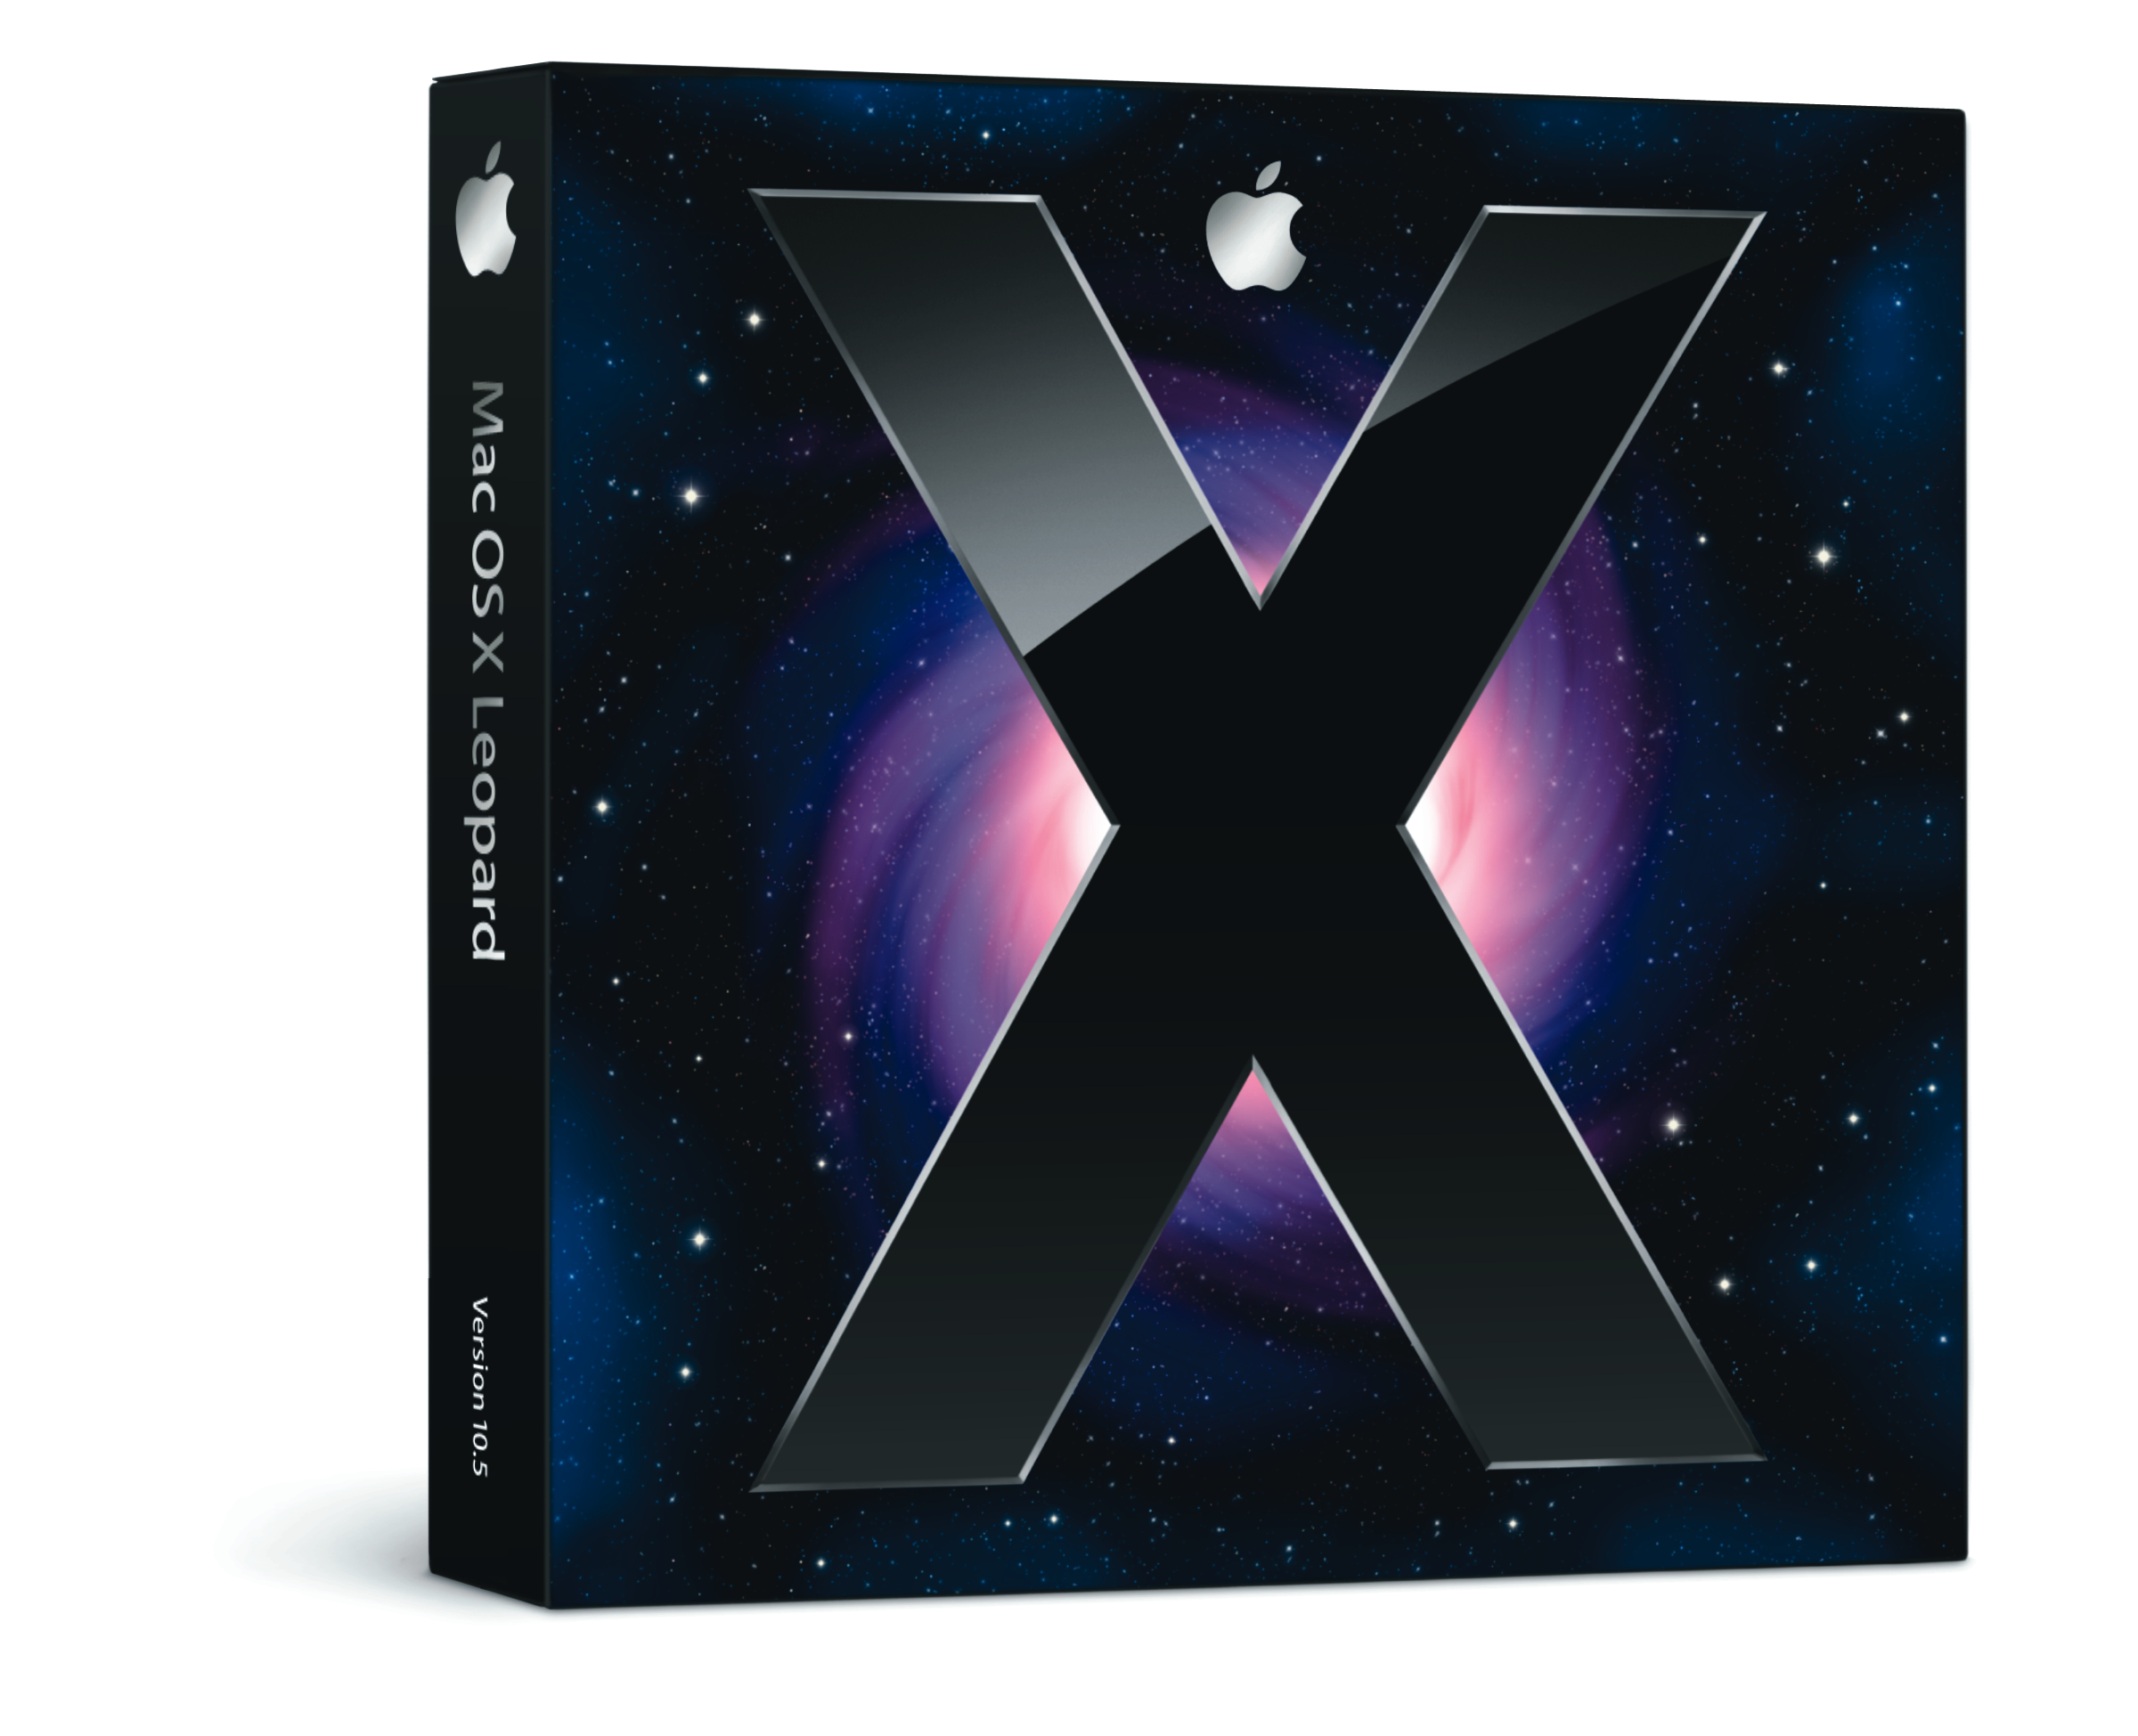 X. Mac os x 10.5. Mac os x 10.5 Leopard. Mac os x Server 10.10.